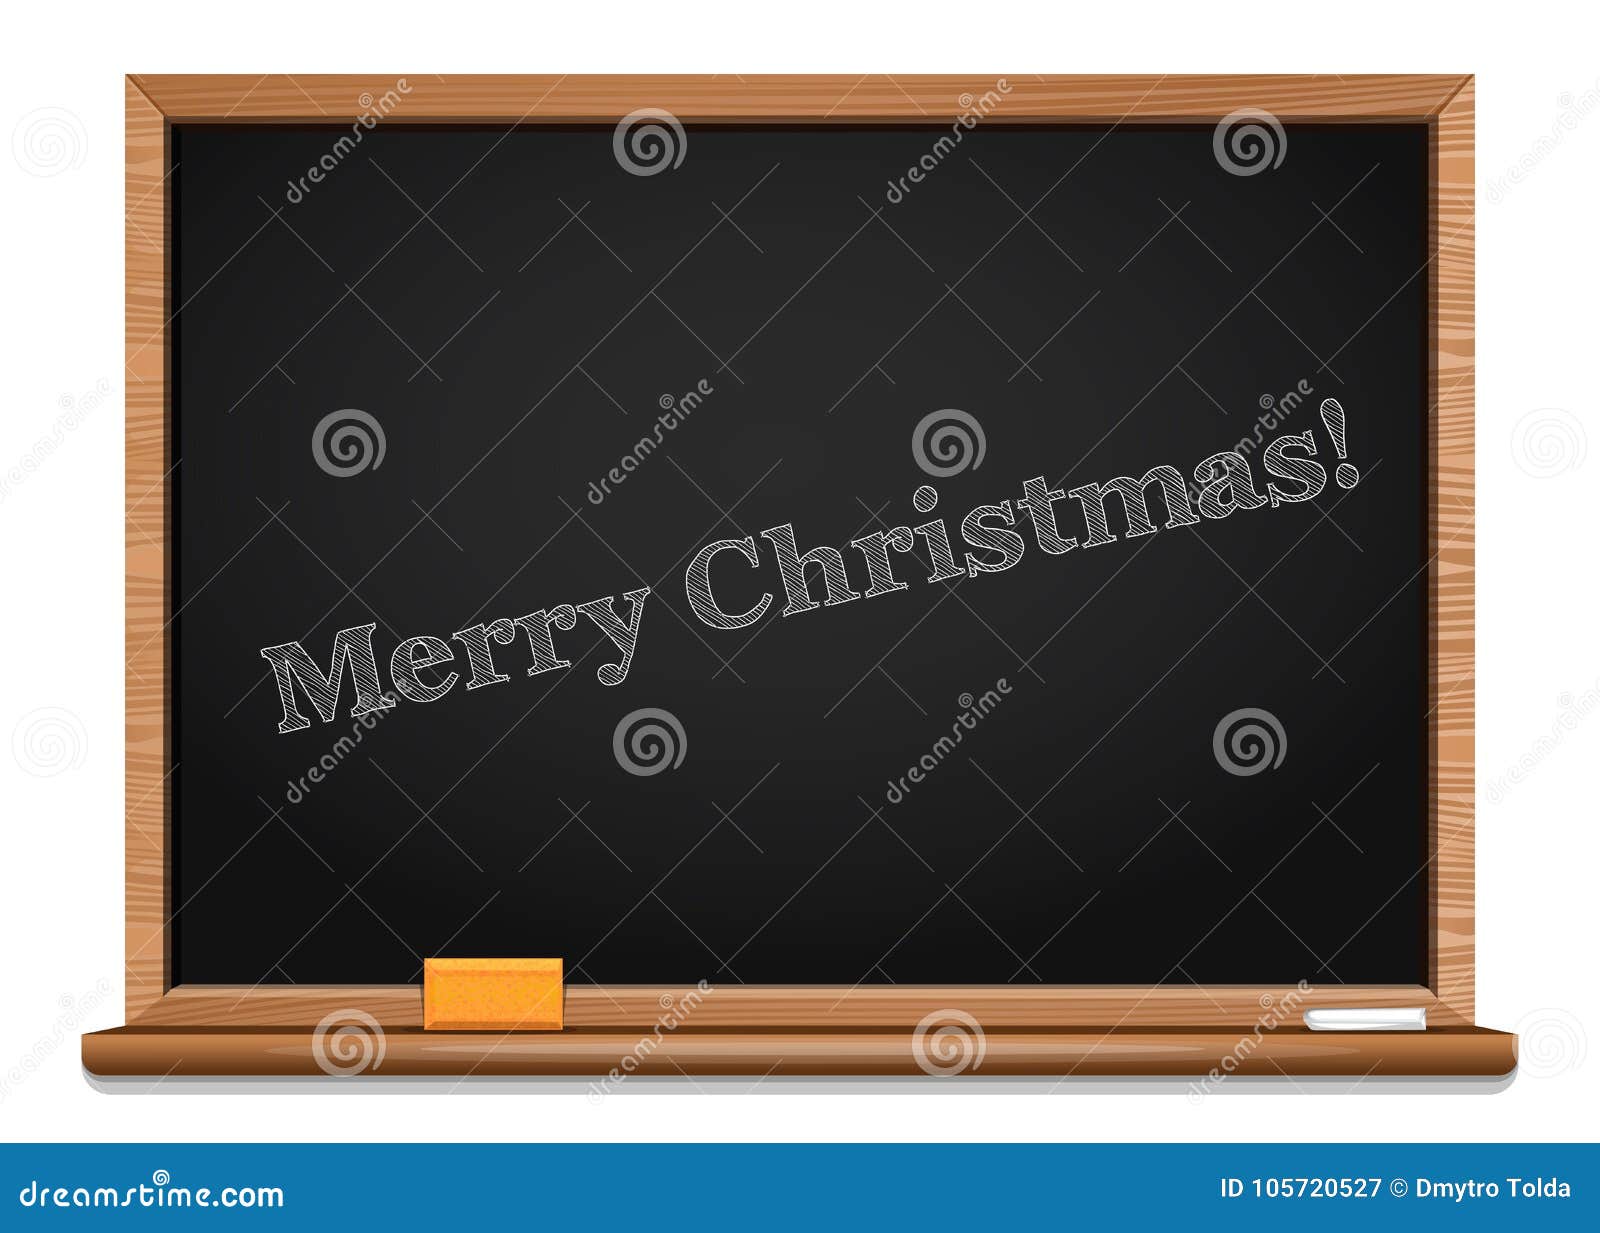 Merry Christmas Christmas greetings written on the blackboard Christmas design Vector illustration